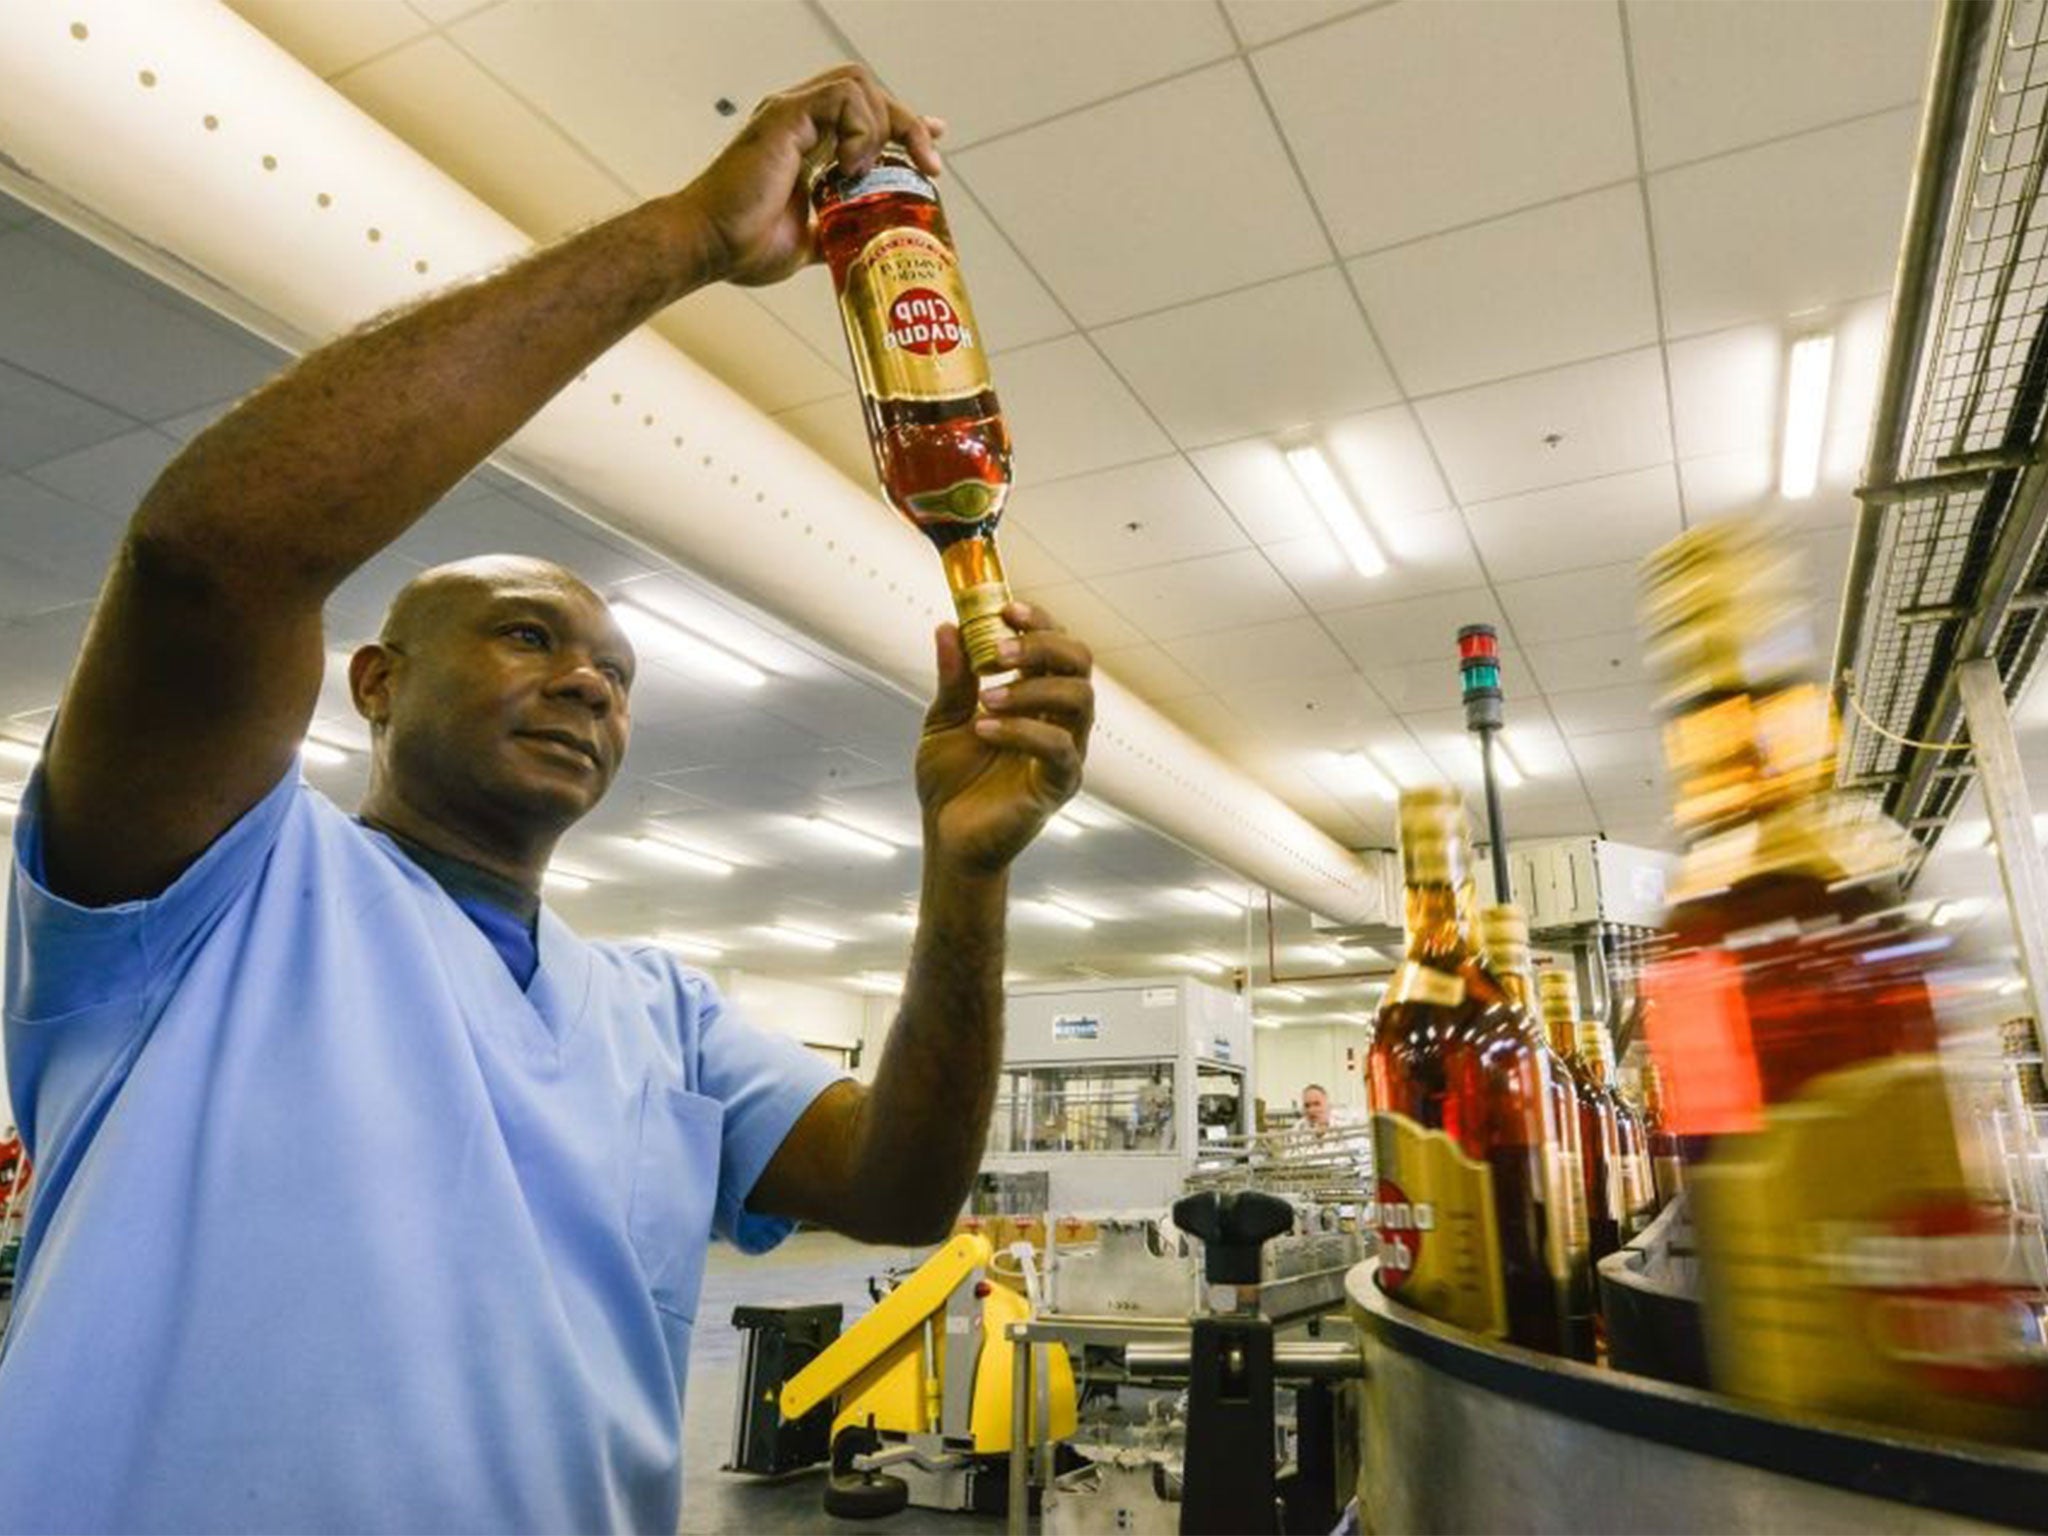 Havana Club rum, produced in San José de las Lajas, Cuba, cannot be exported to the US because of its trade embargo